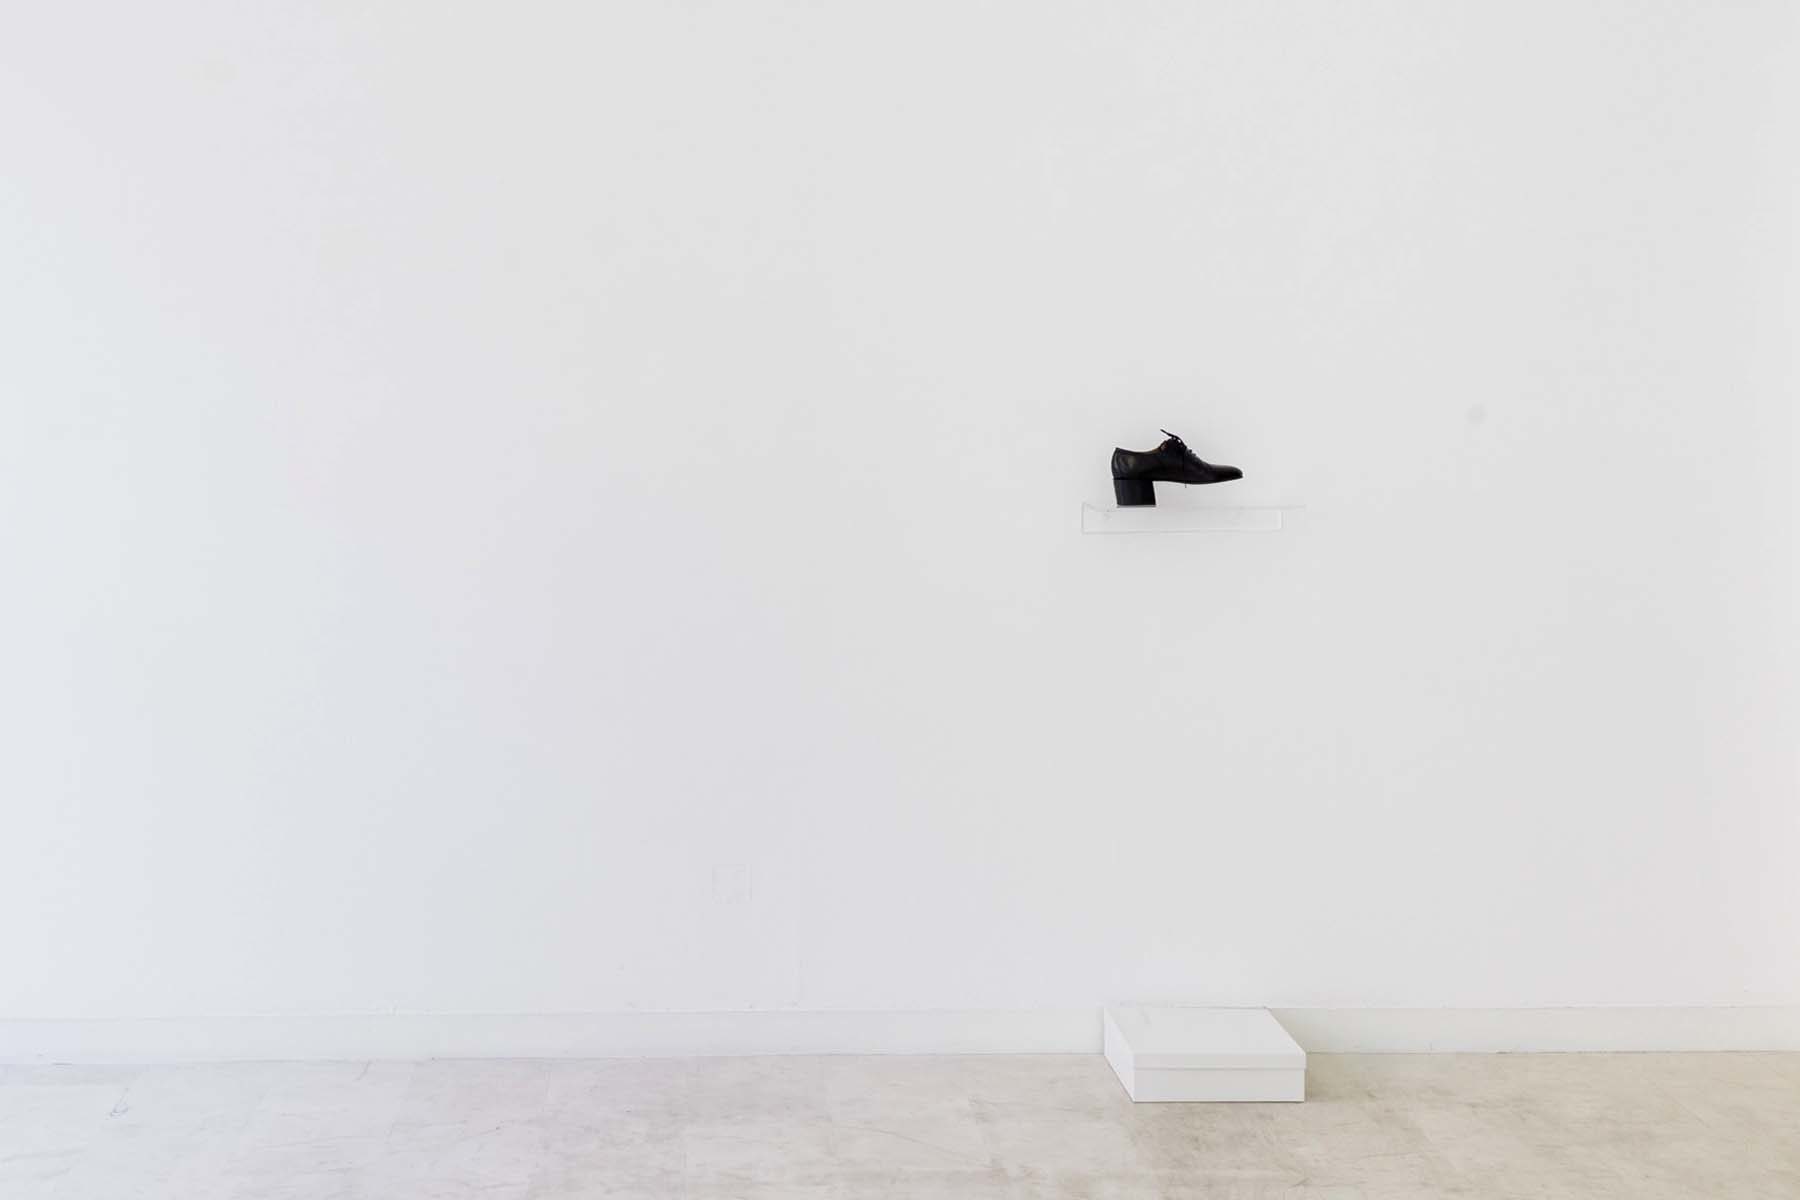 G. Morbin, Belvedere, 2009, handmade man black leather shoes #43 “classico modello”, box, environmental dimensions